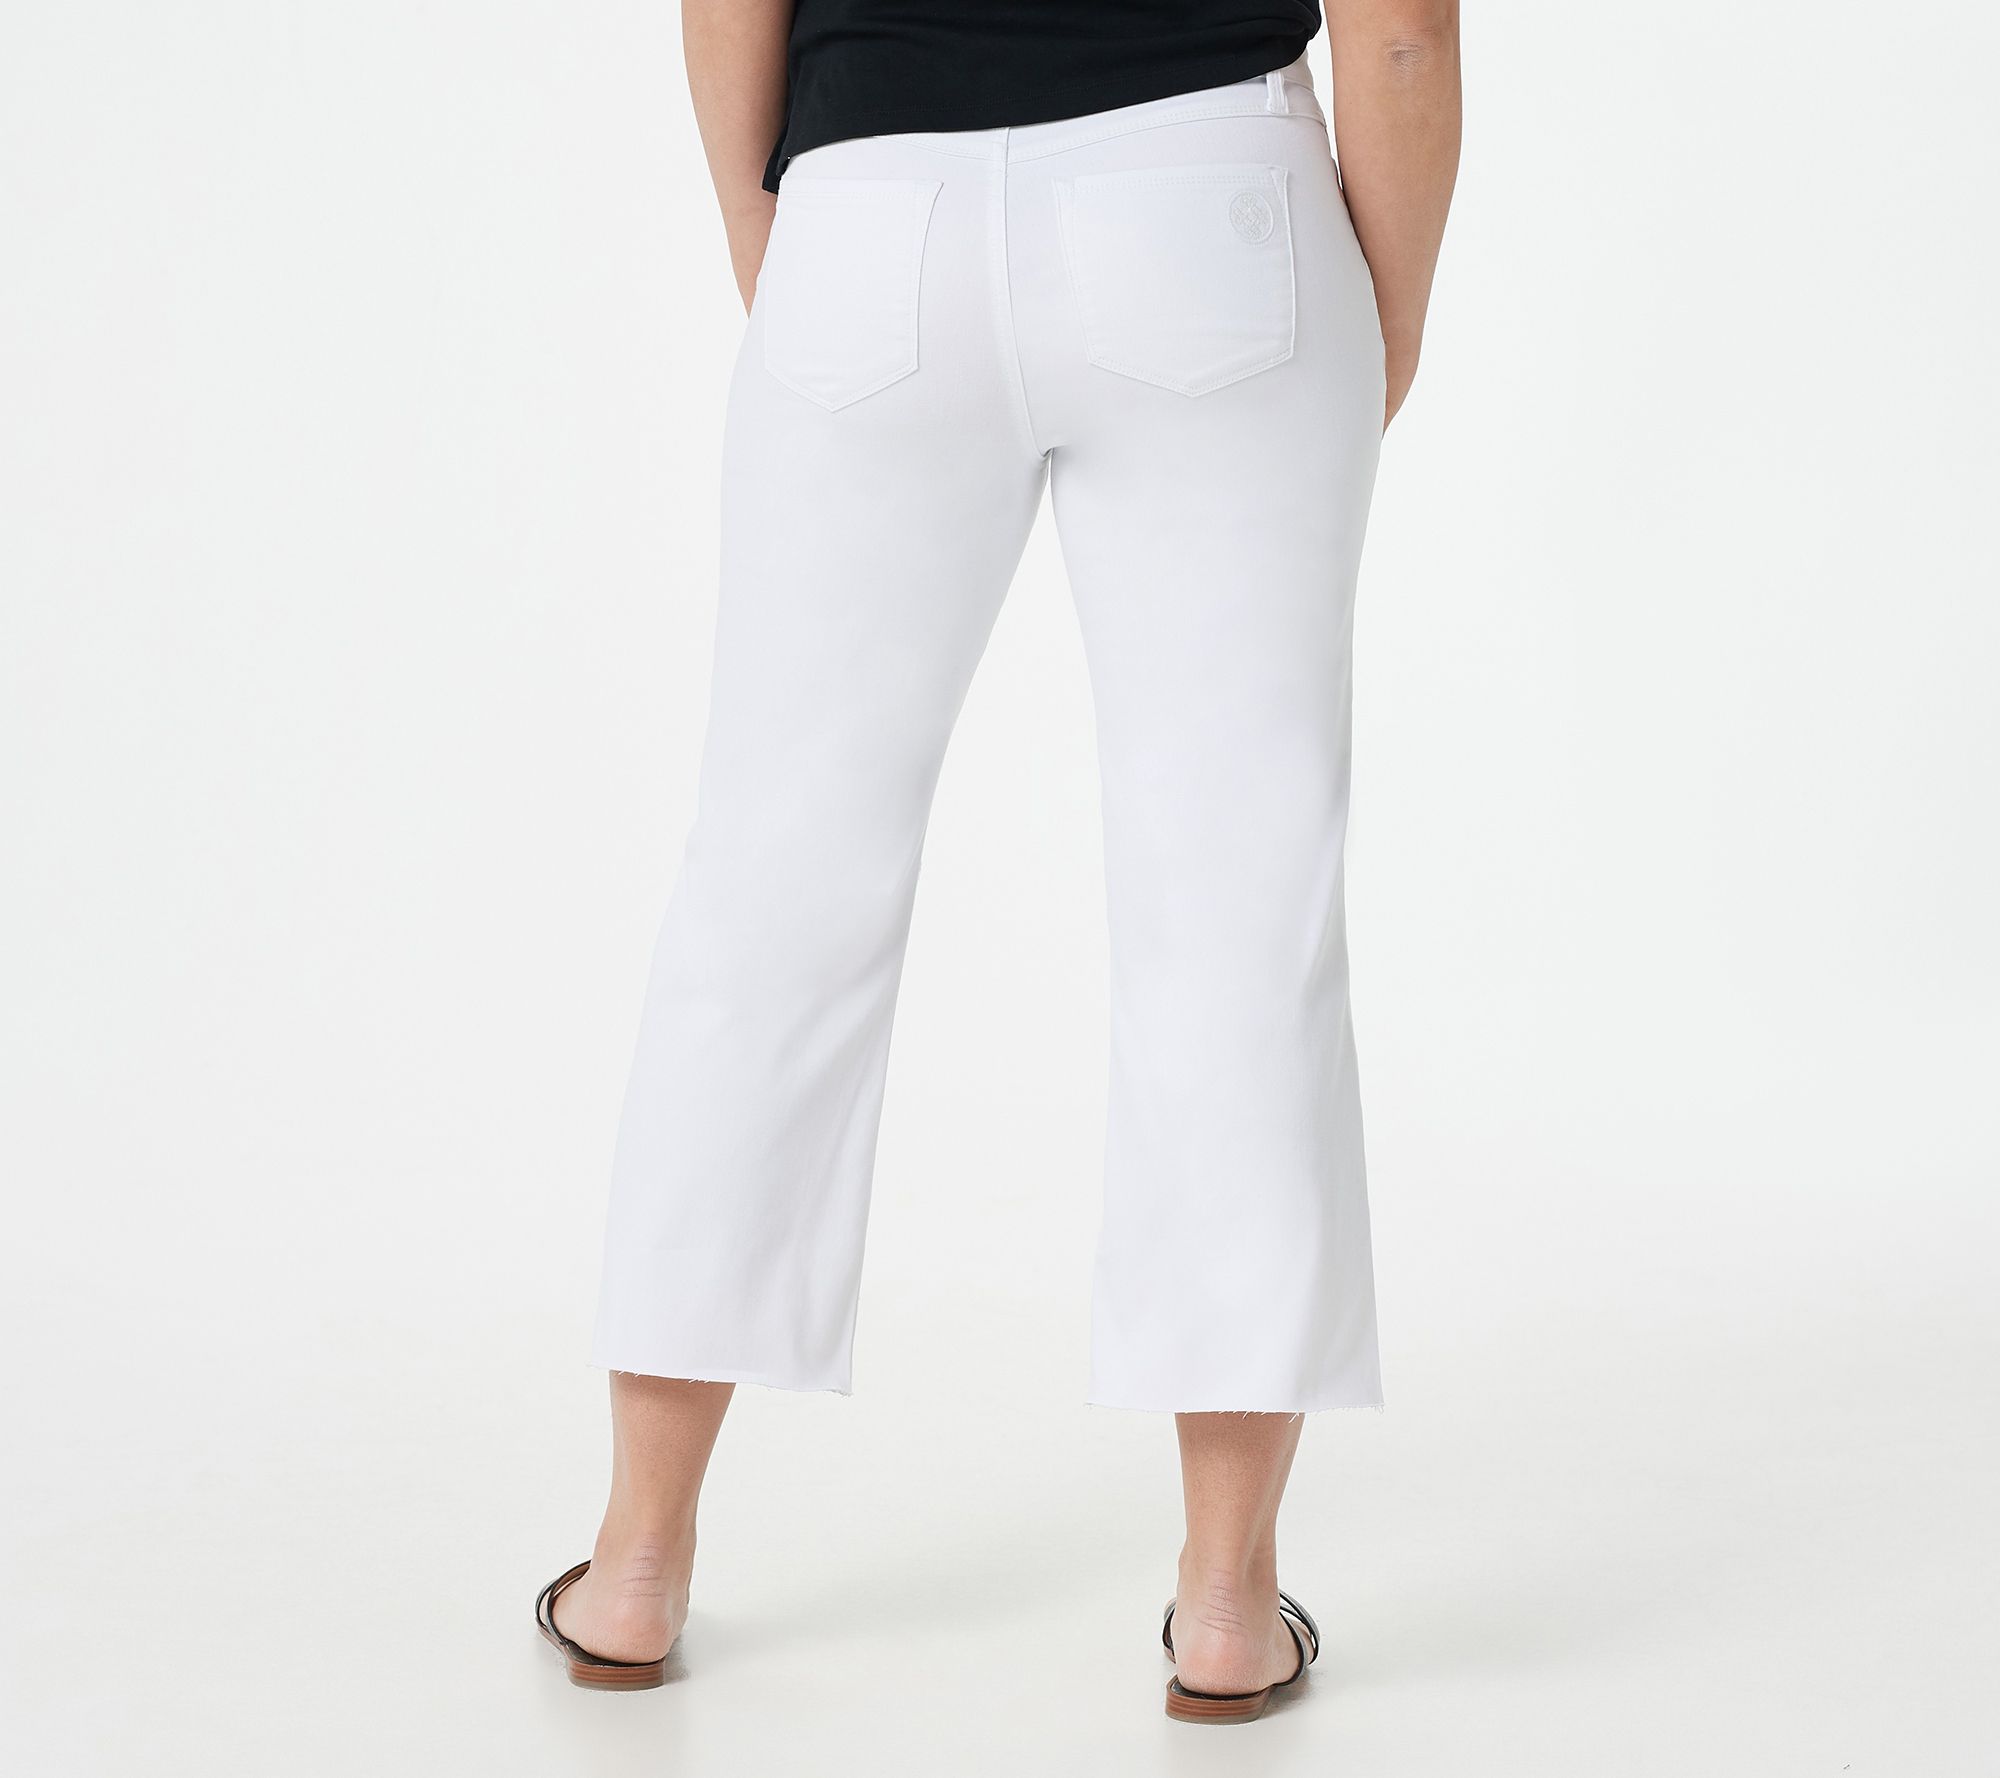 Laurie Felt Regular Daisy Denim Wide-Leg Crop Jeans- White - QVC.com